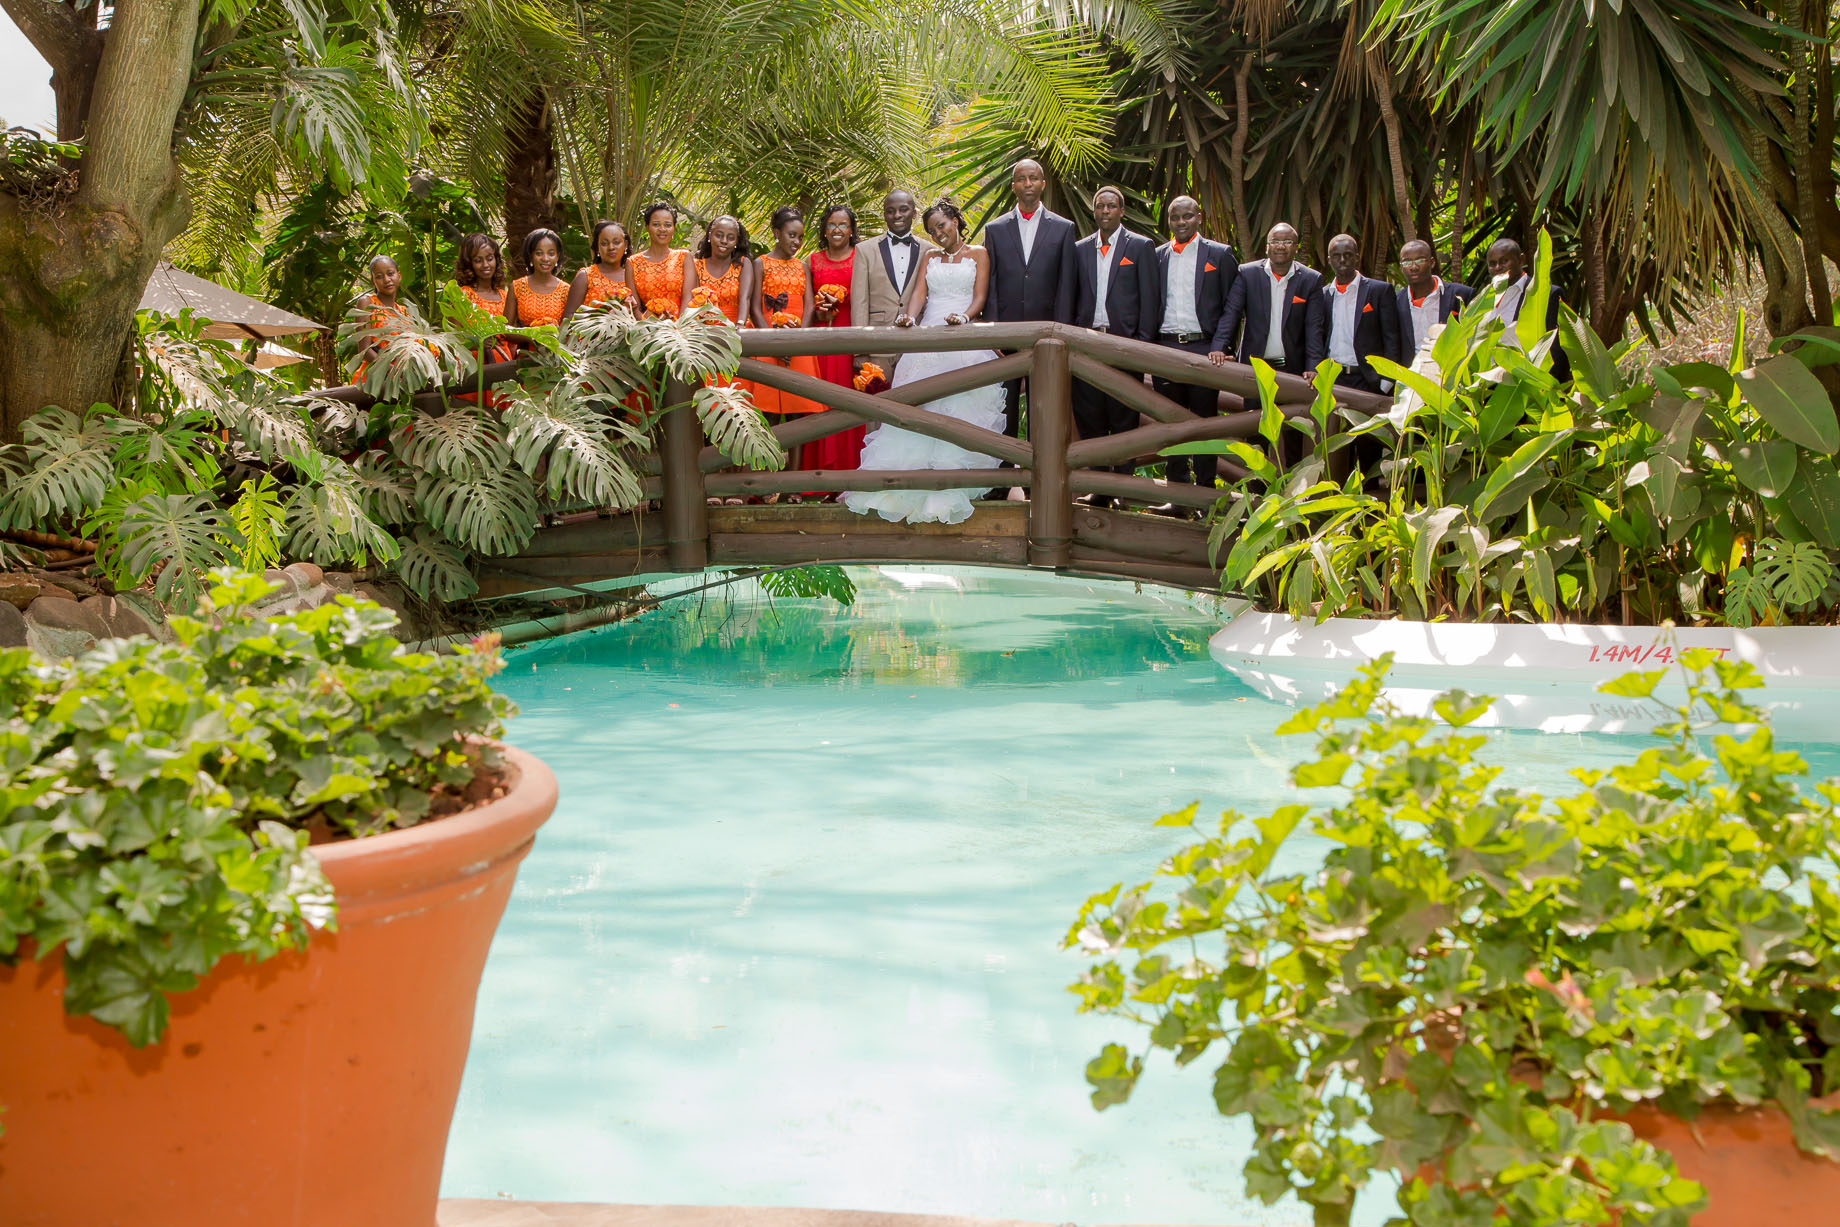 Best wedding photography in Kenya